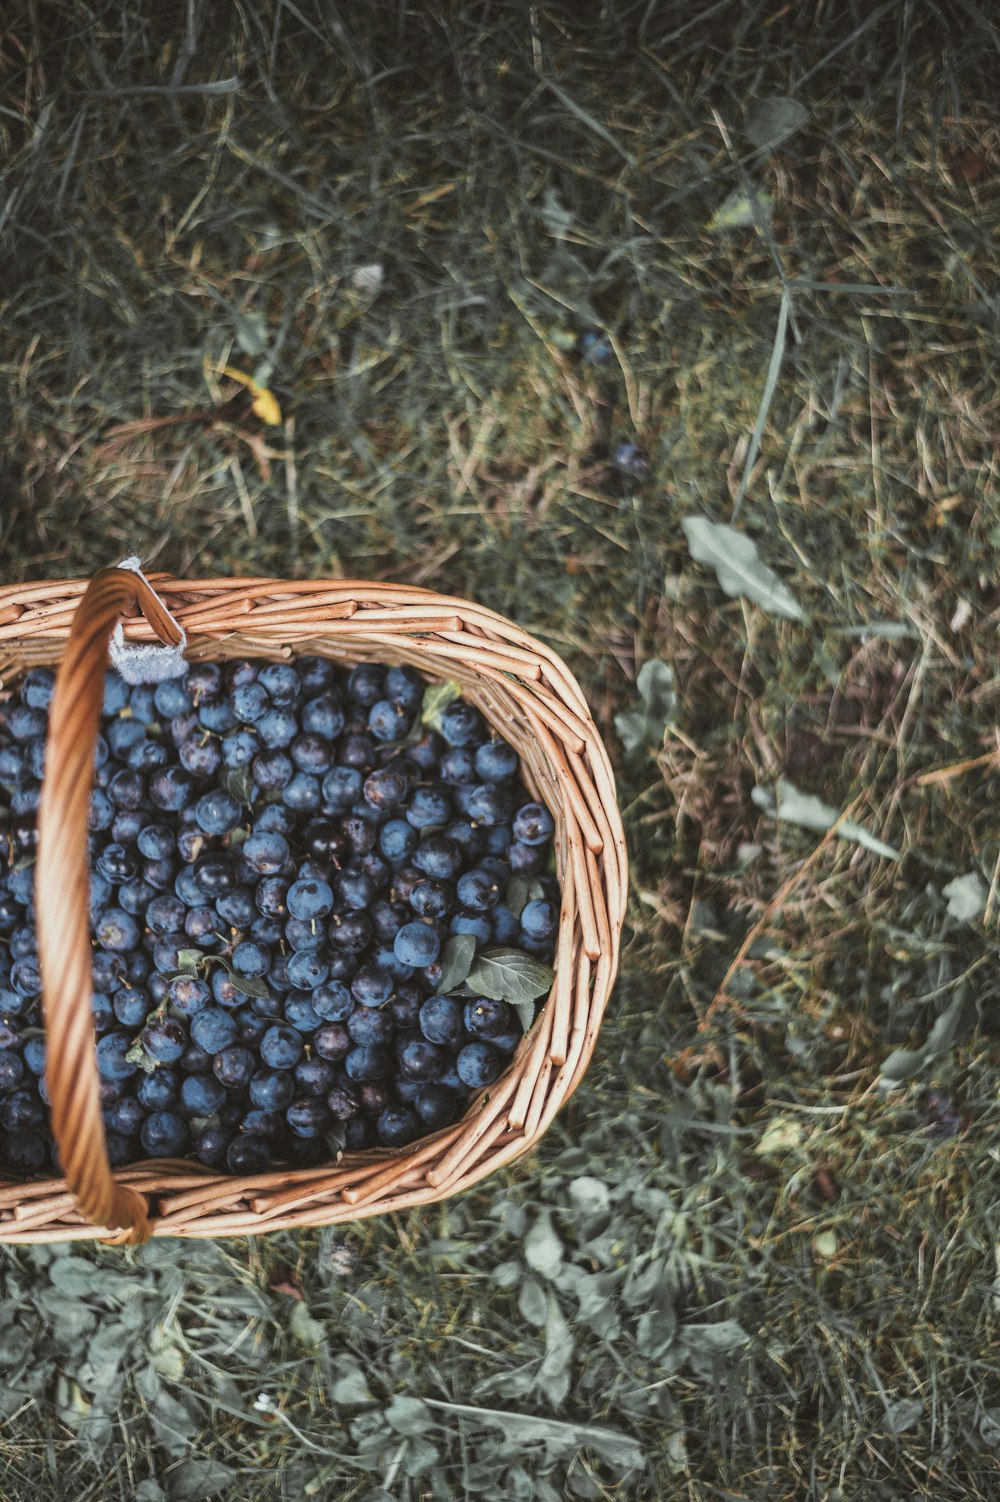 blueberries on basket